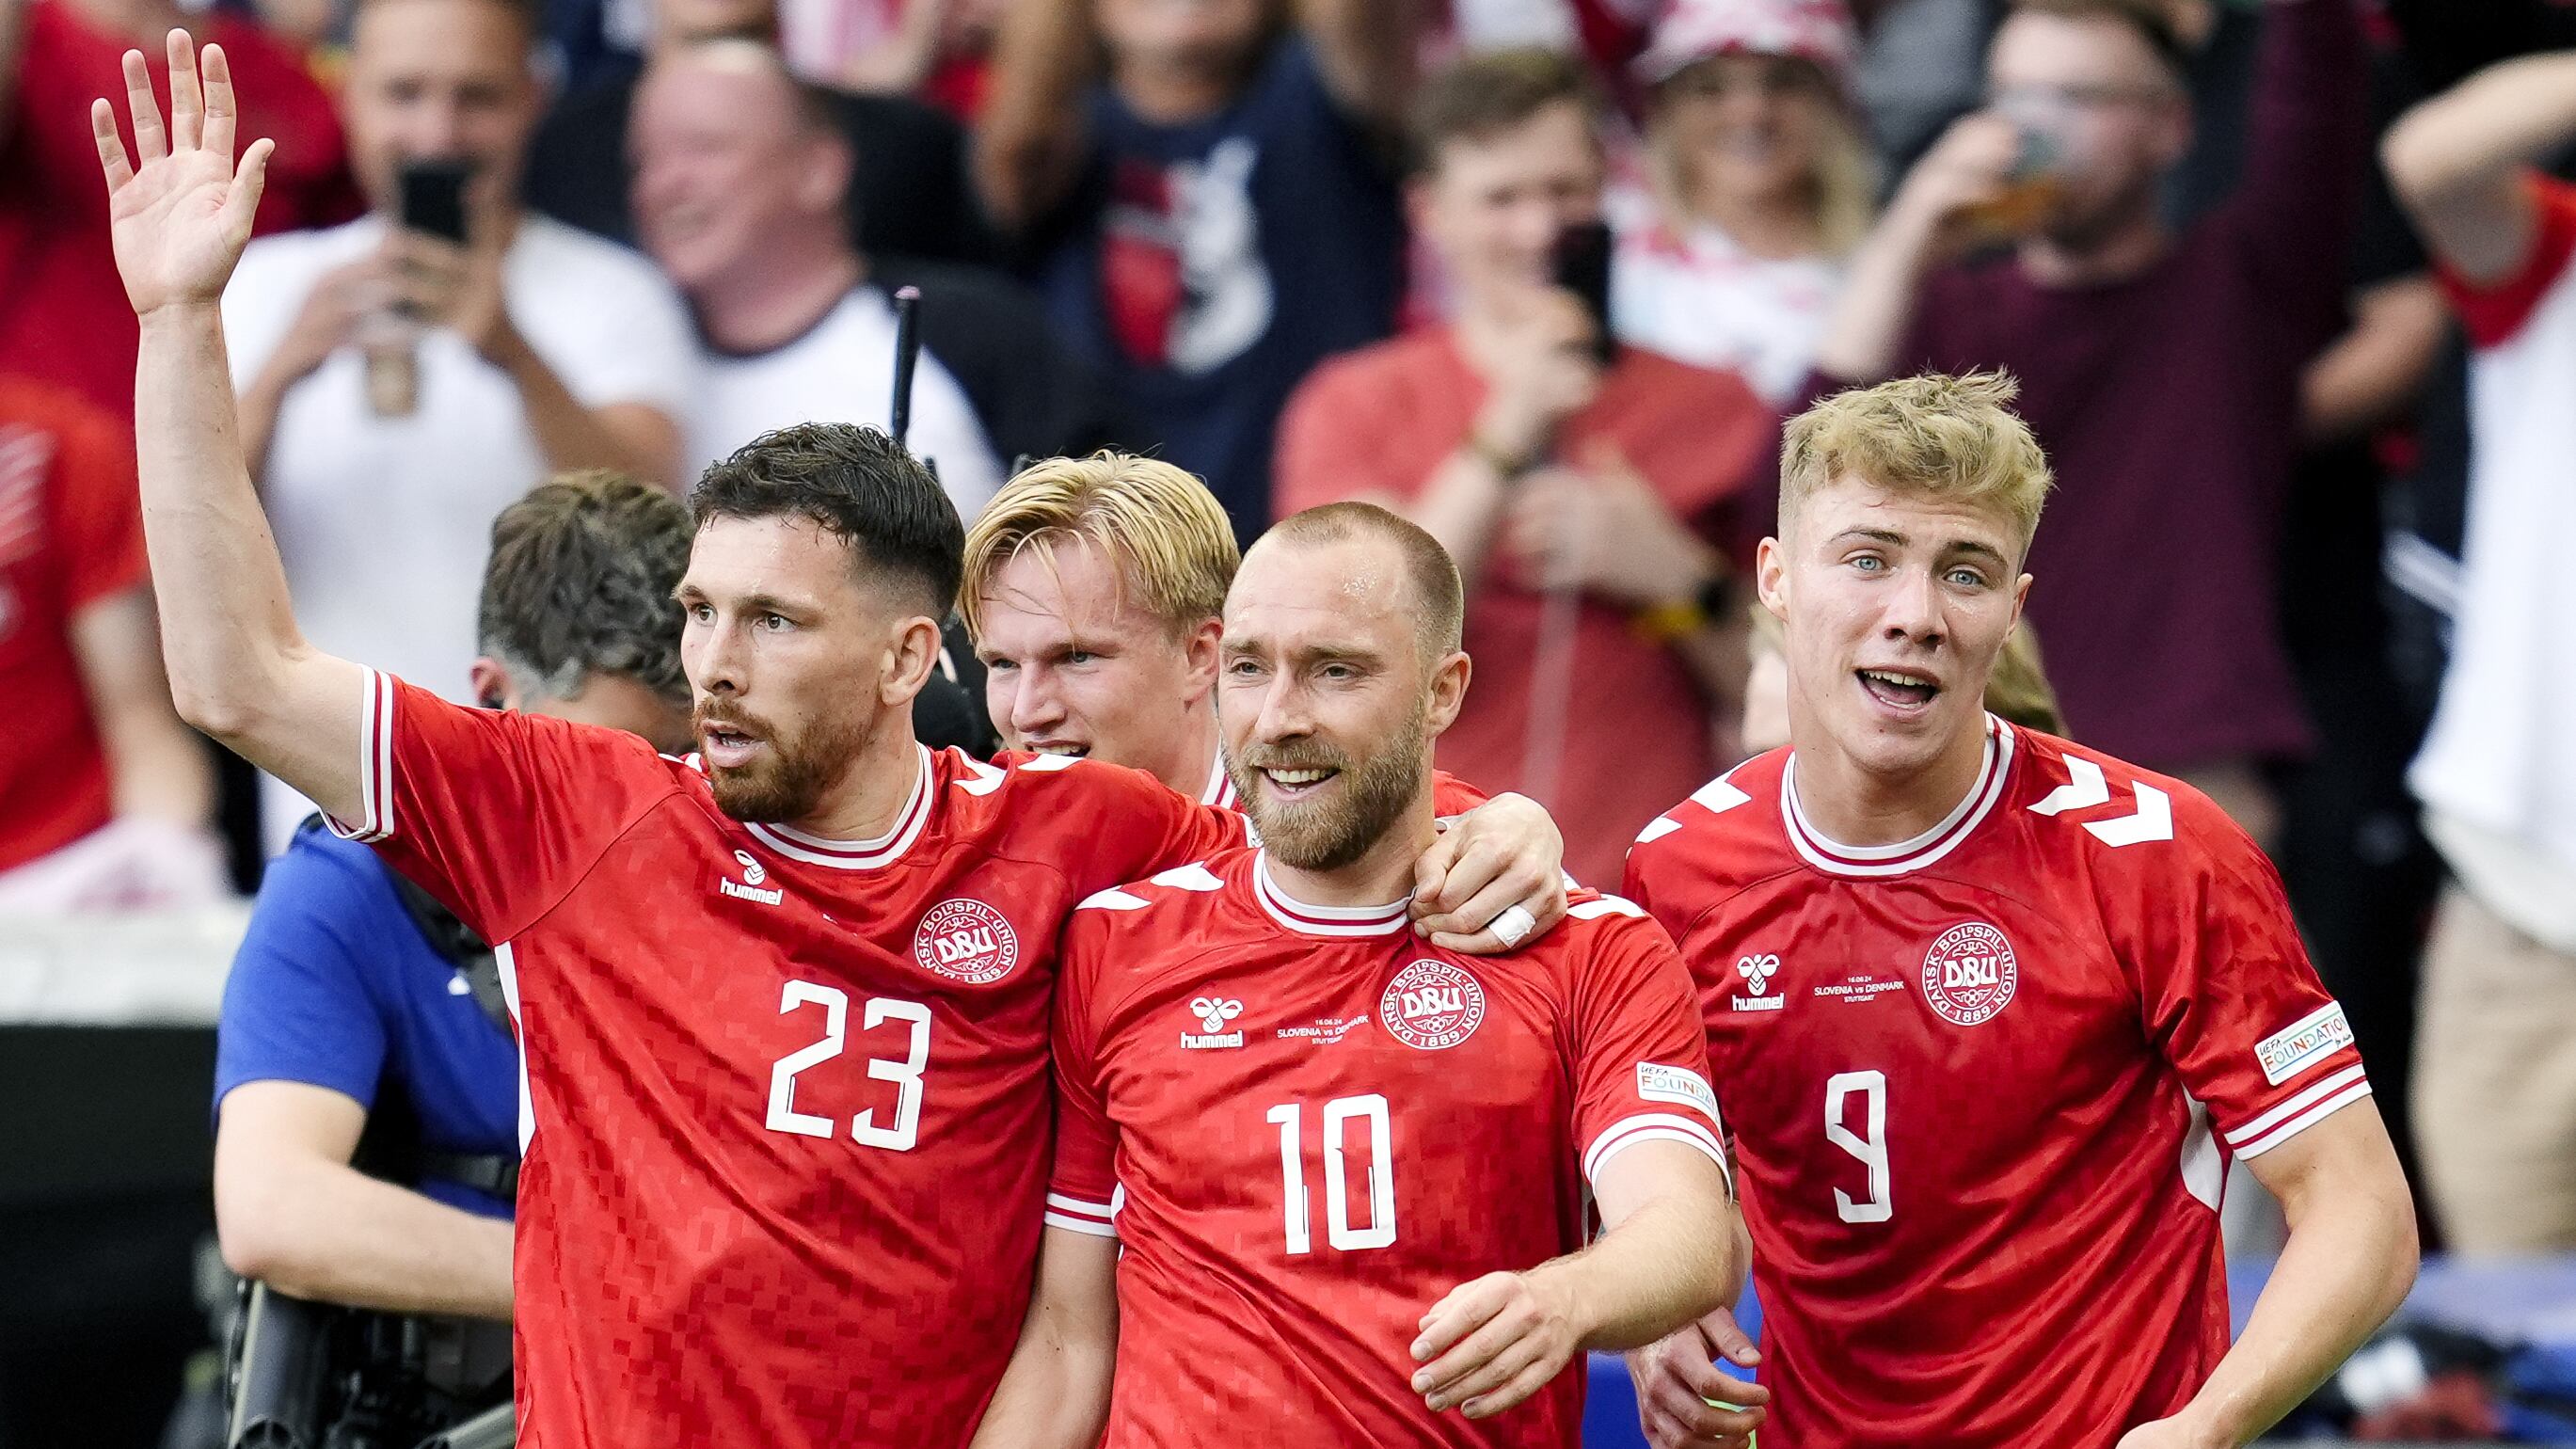 Christian Eriksen, centre, celebrates with team-mates after scoring Denmark’s opener